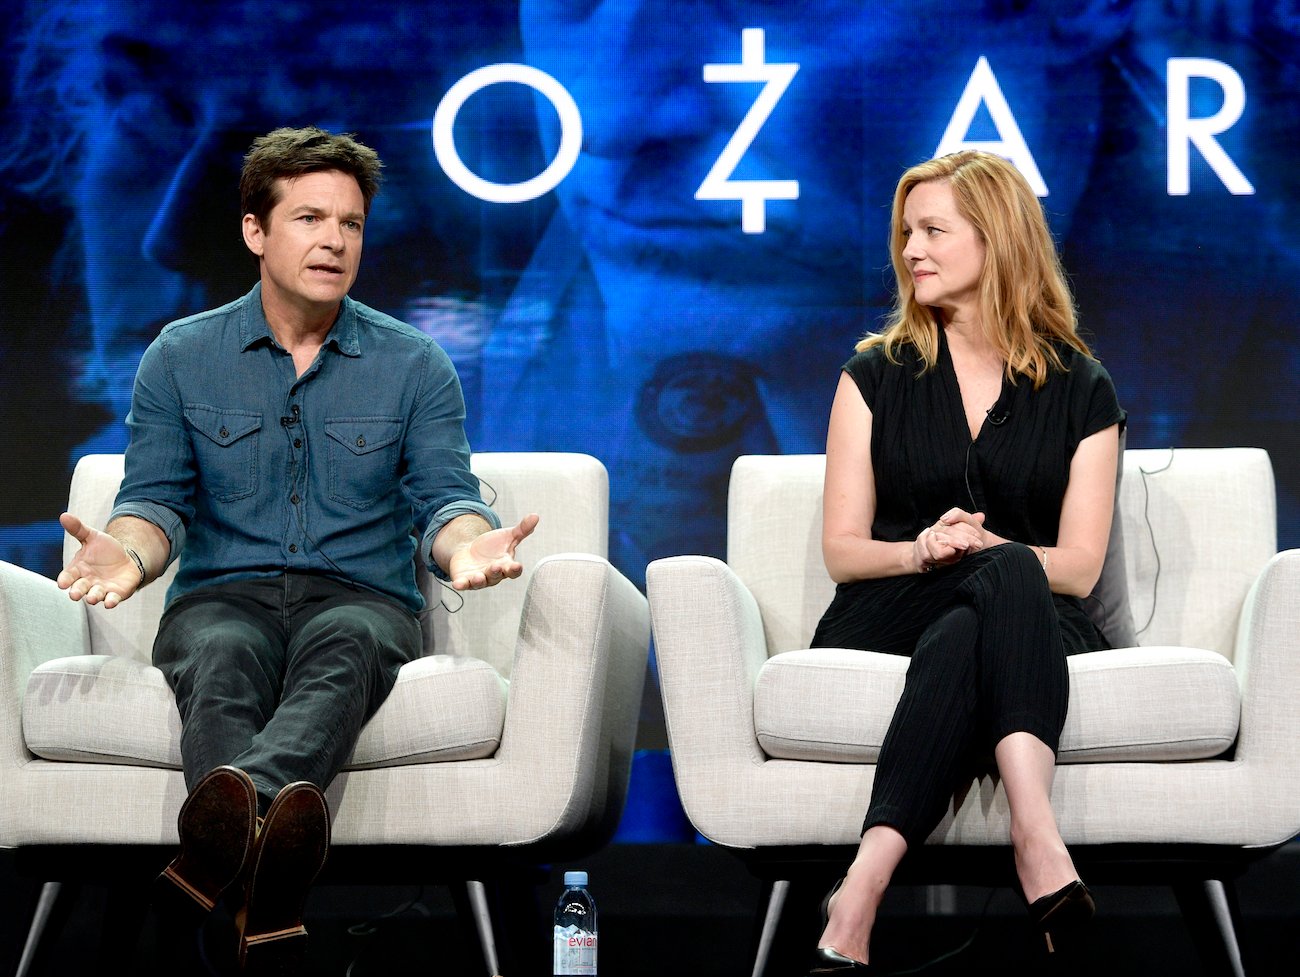 'Ozark' stars Jason Bateman and Laura Linney at the Netflix TCA event in 2018